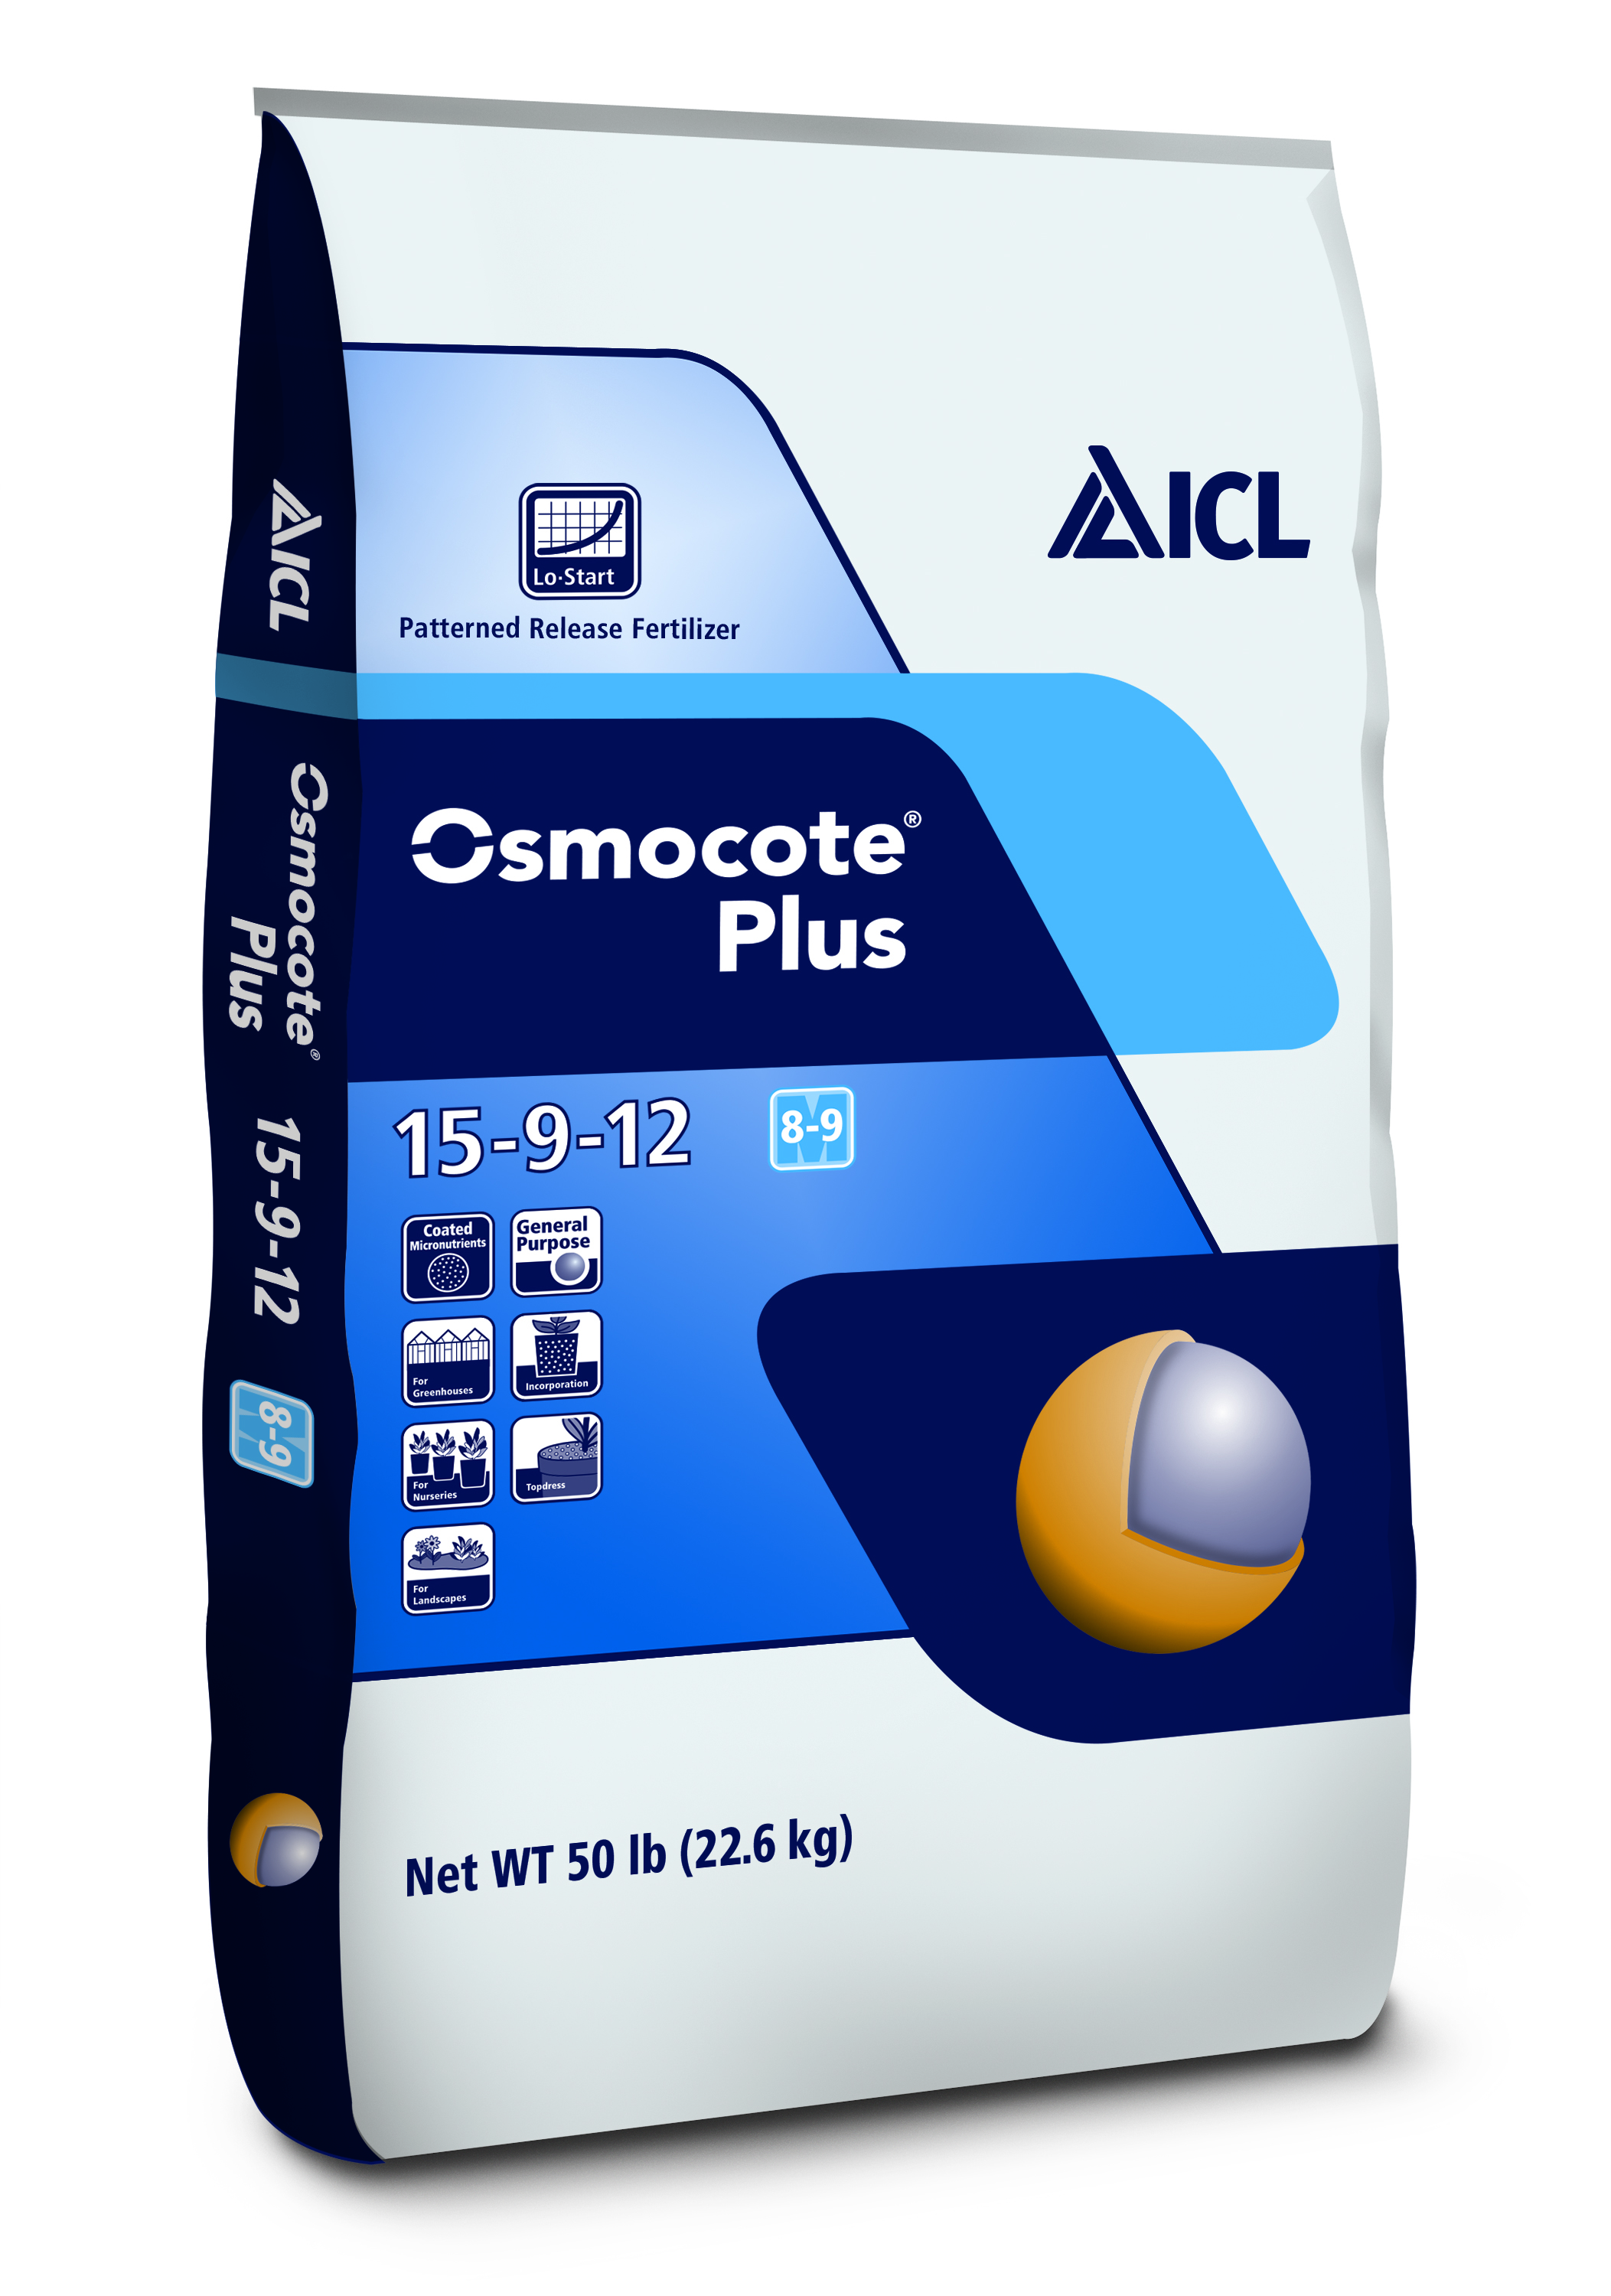 Osmocote® Plus 15-9-12, 8-9M Lo-start